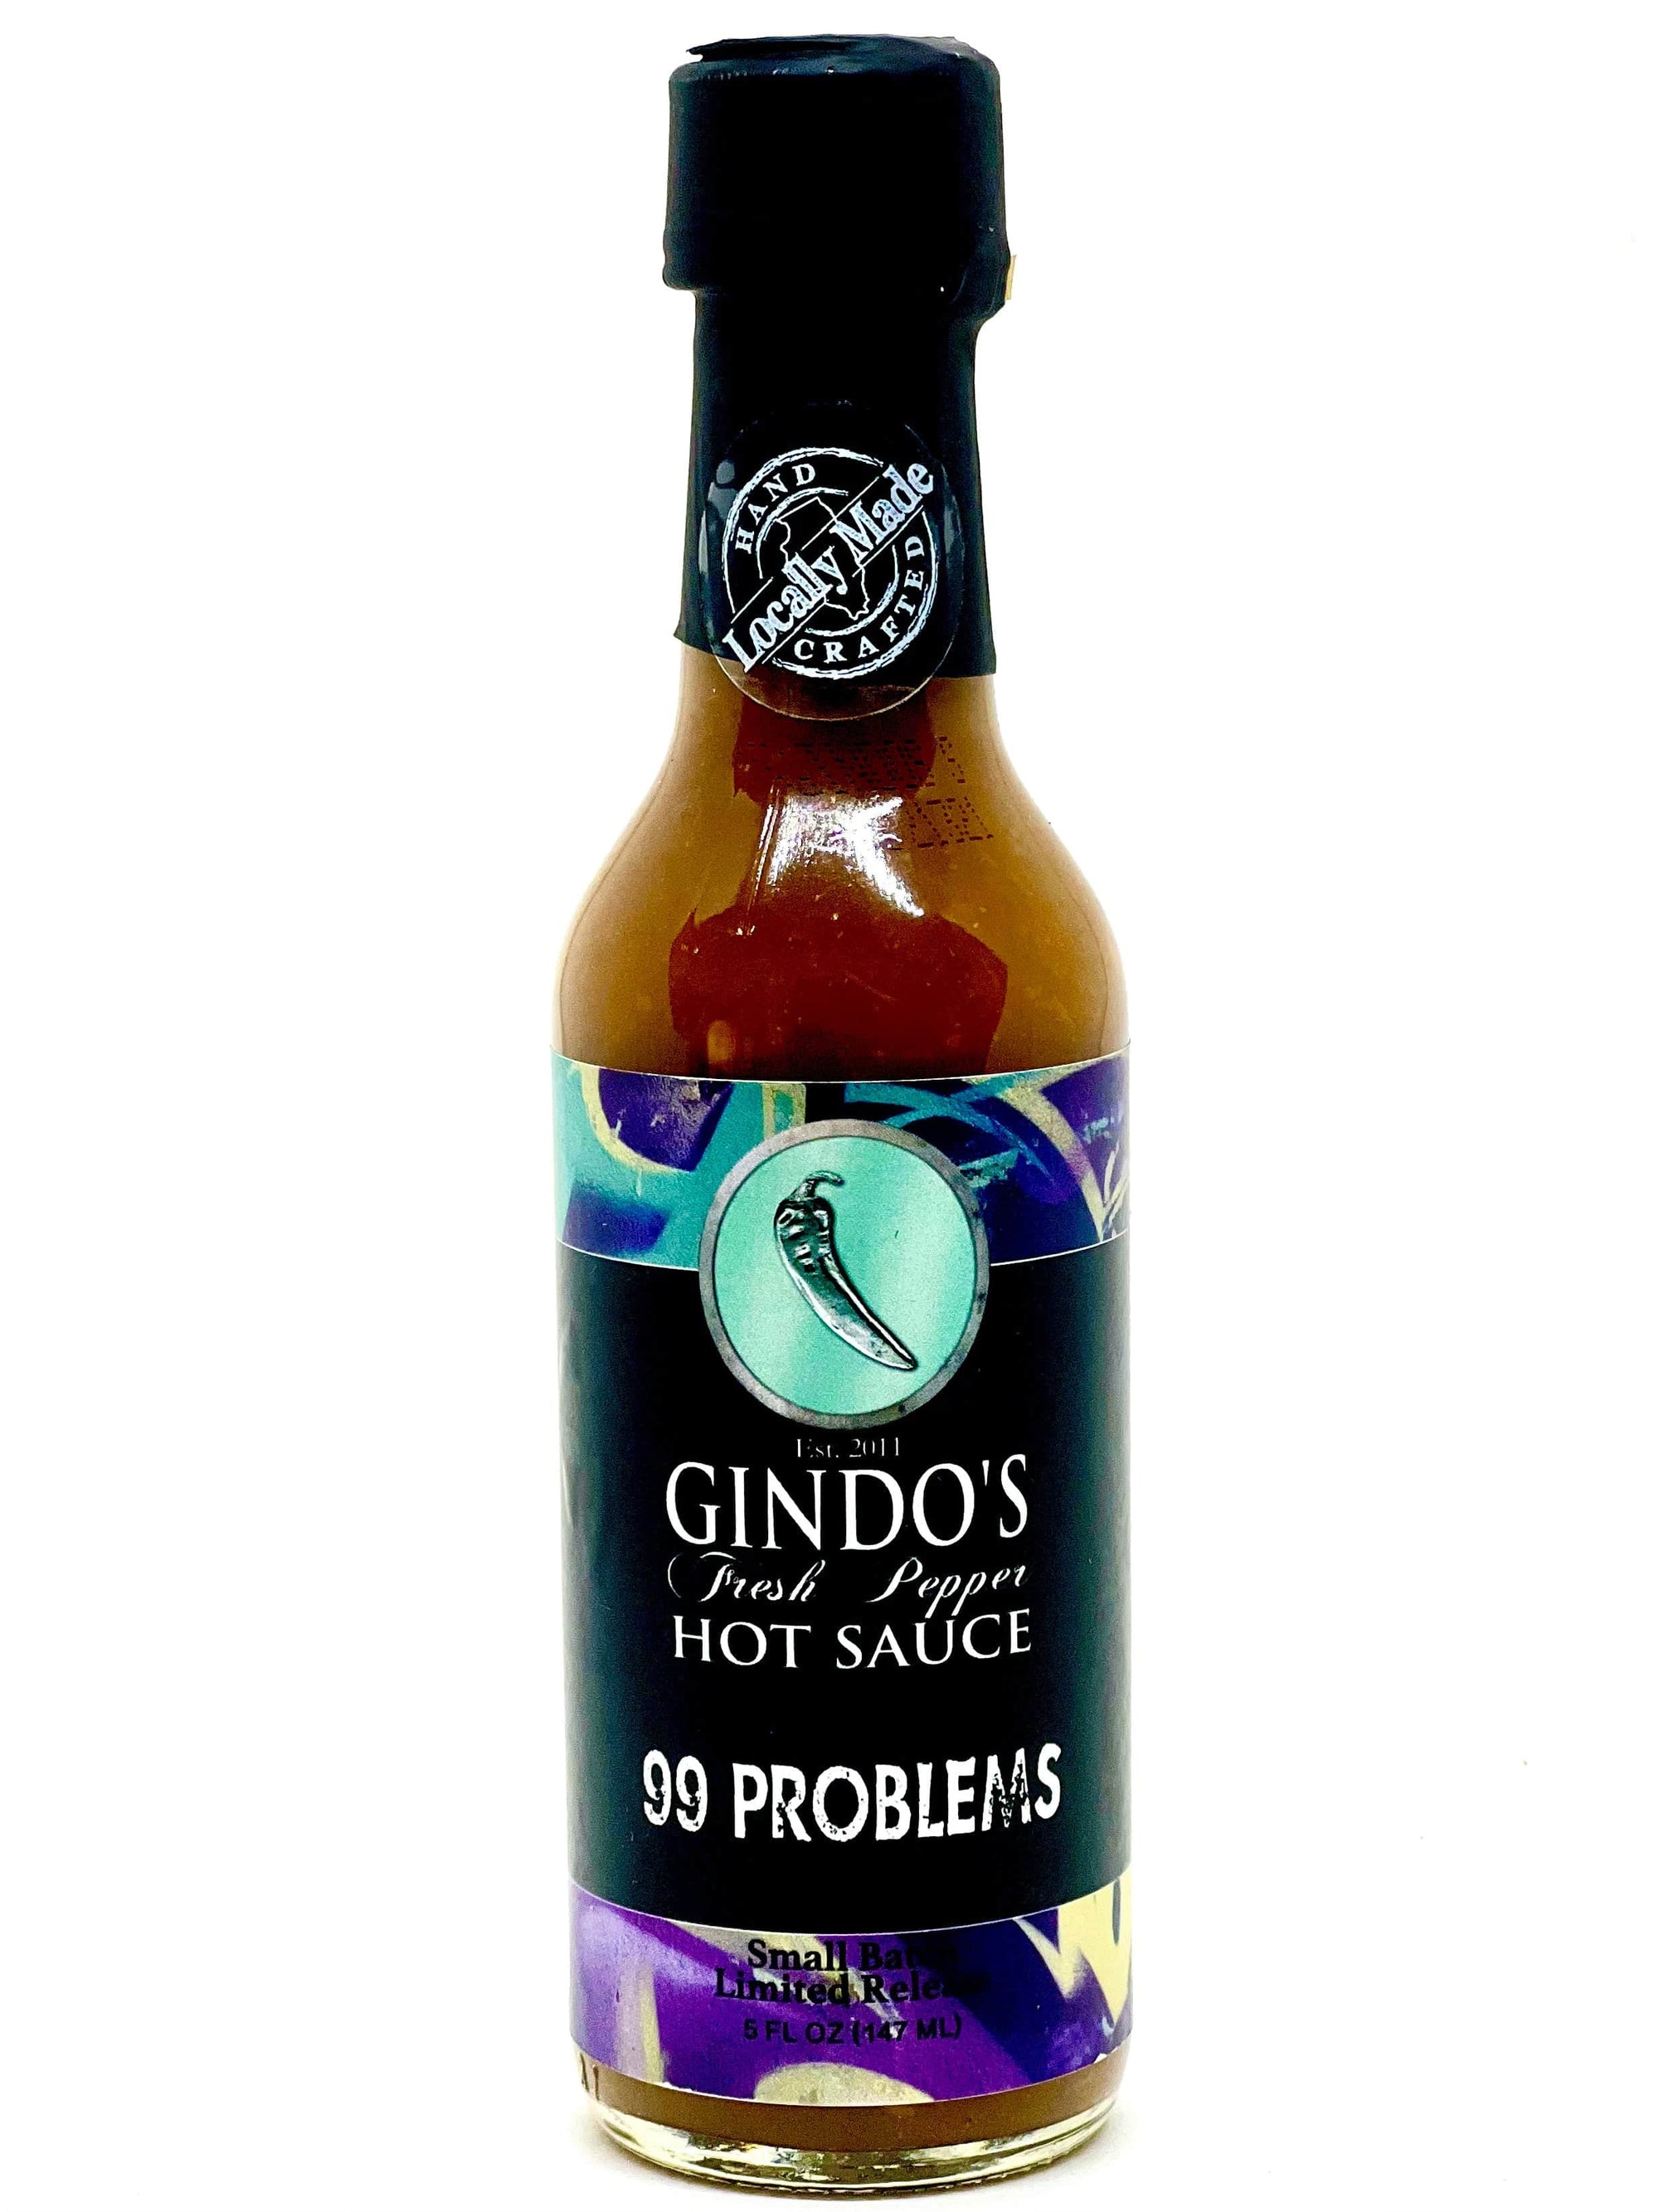 99 Problems Hot Sauce